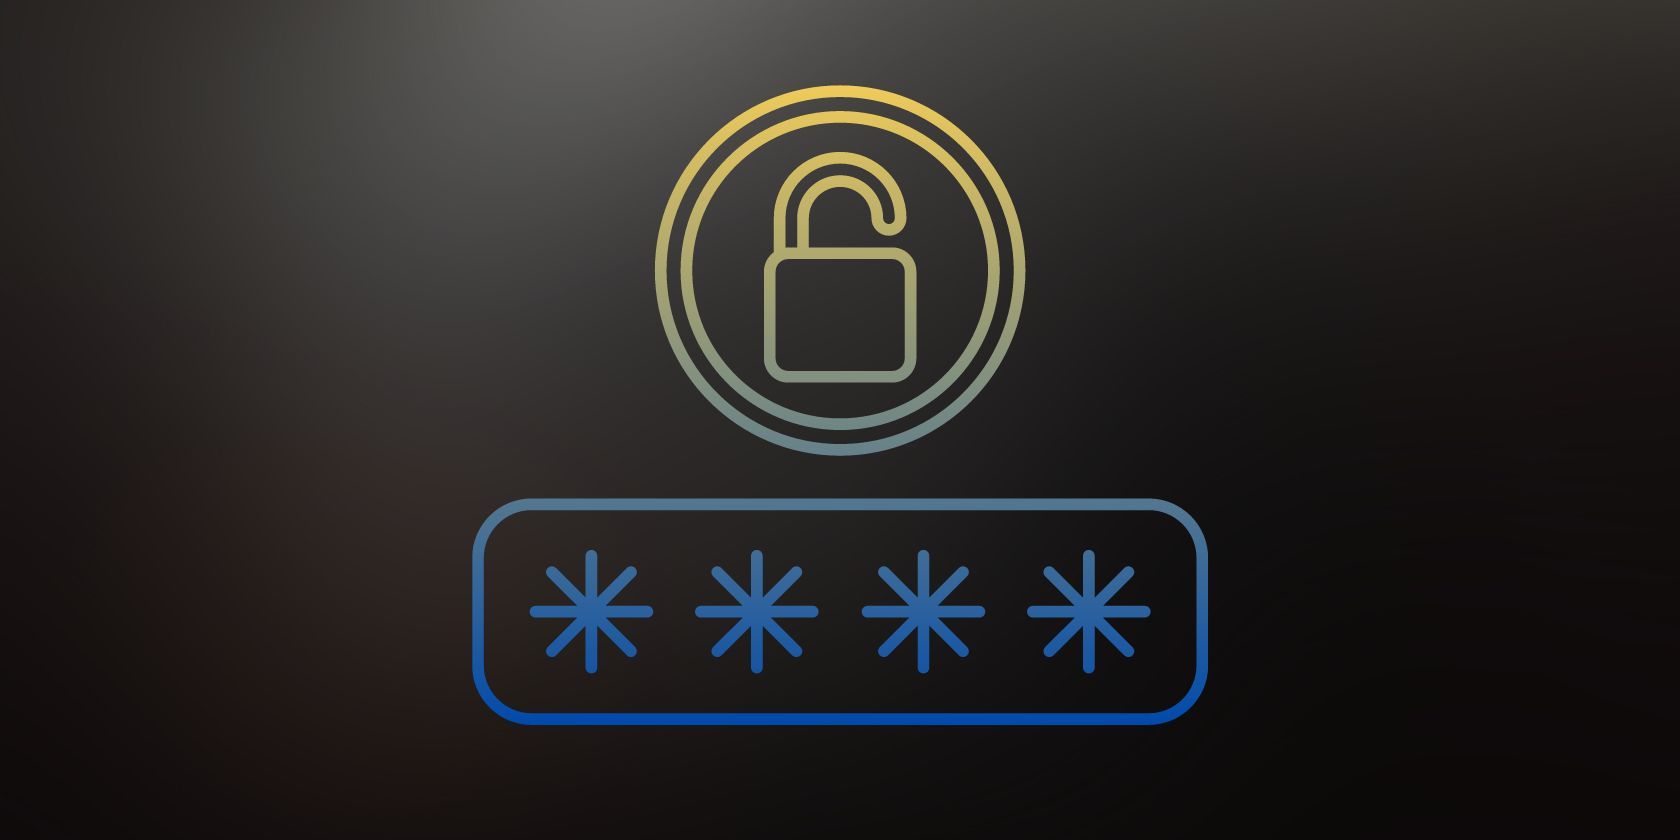 Password lock symbol on dark background 